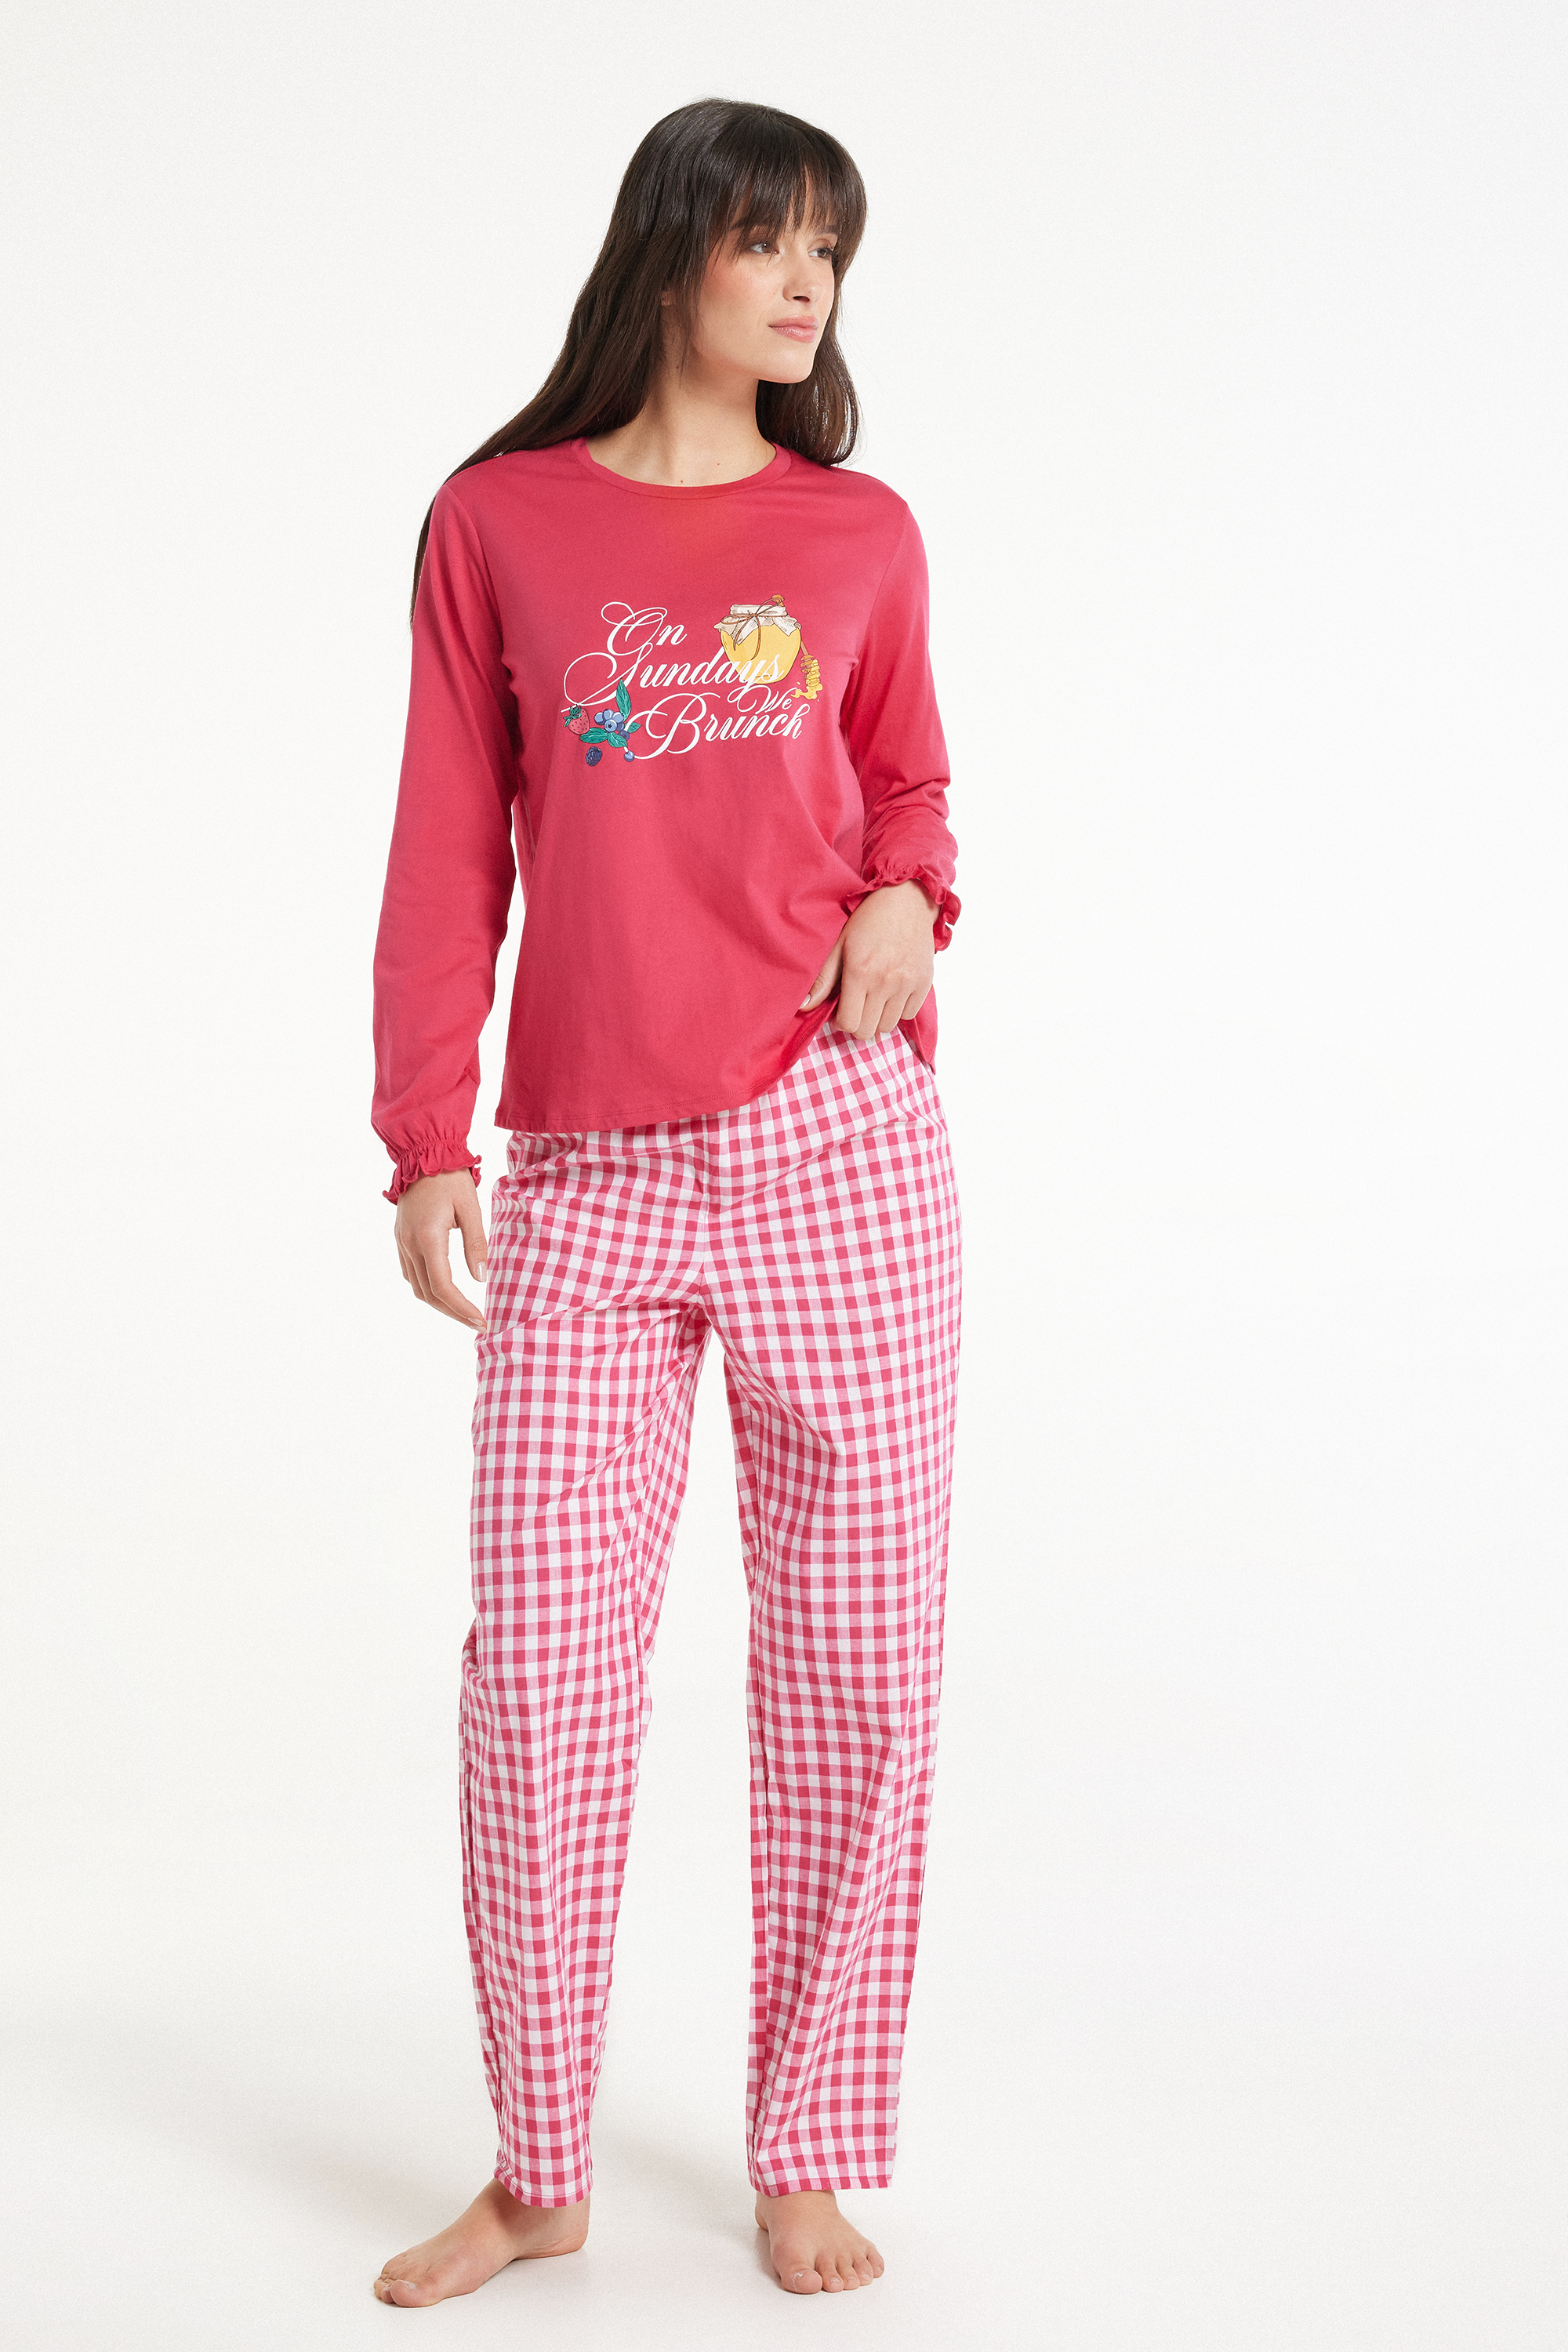 Pyjama Long en Coton Imprimé « Brunch »